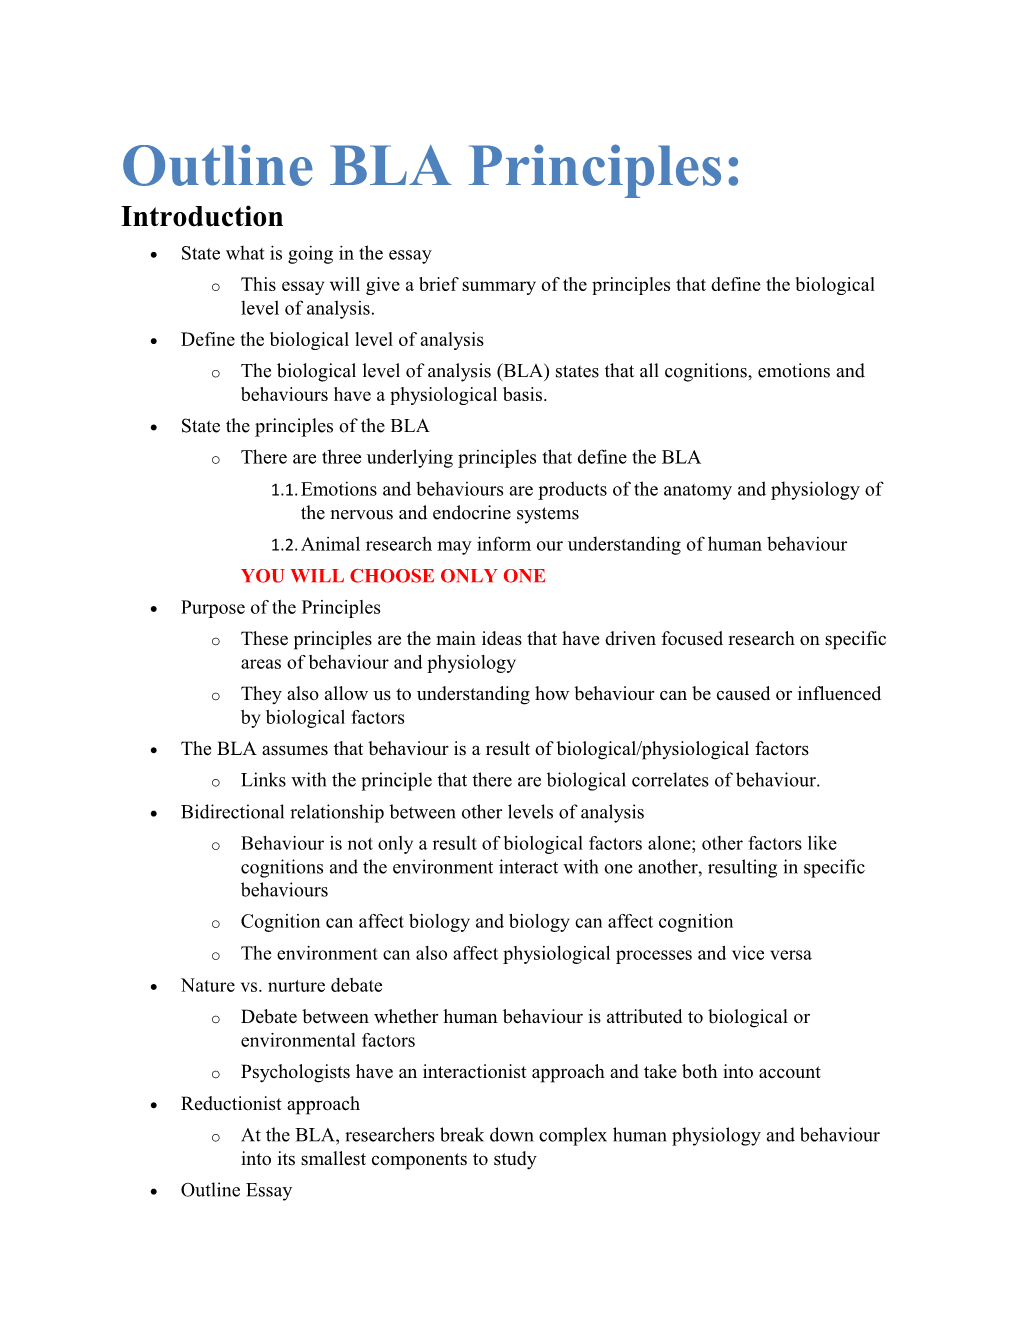 Outline BLA Principles: Introduction